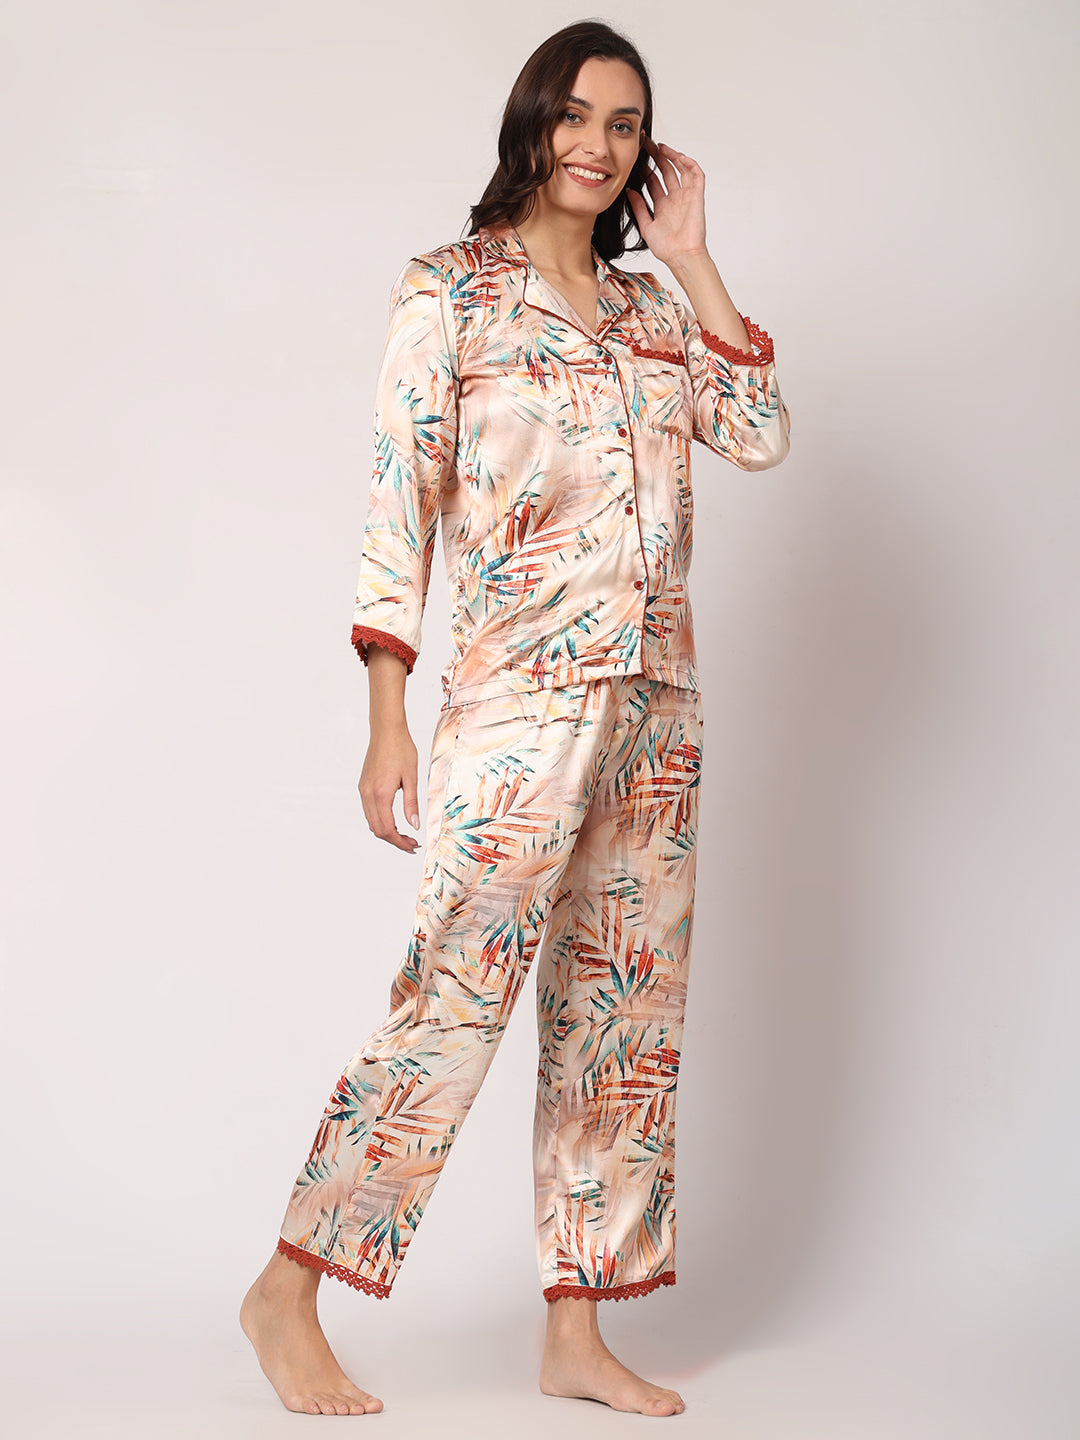 GOCHIKKO Women's Satin Printed Color Night Suit Set of Shirt & Pyjama Pack of 1( Dairy Cream printed)